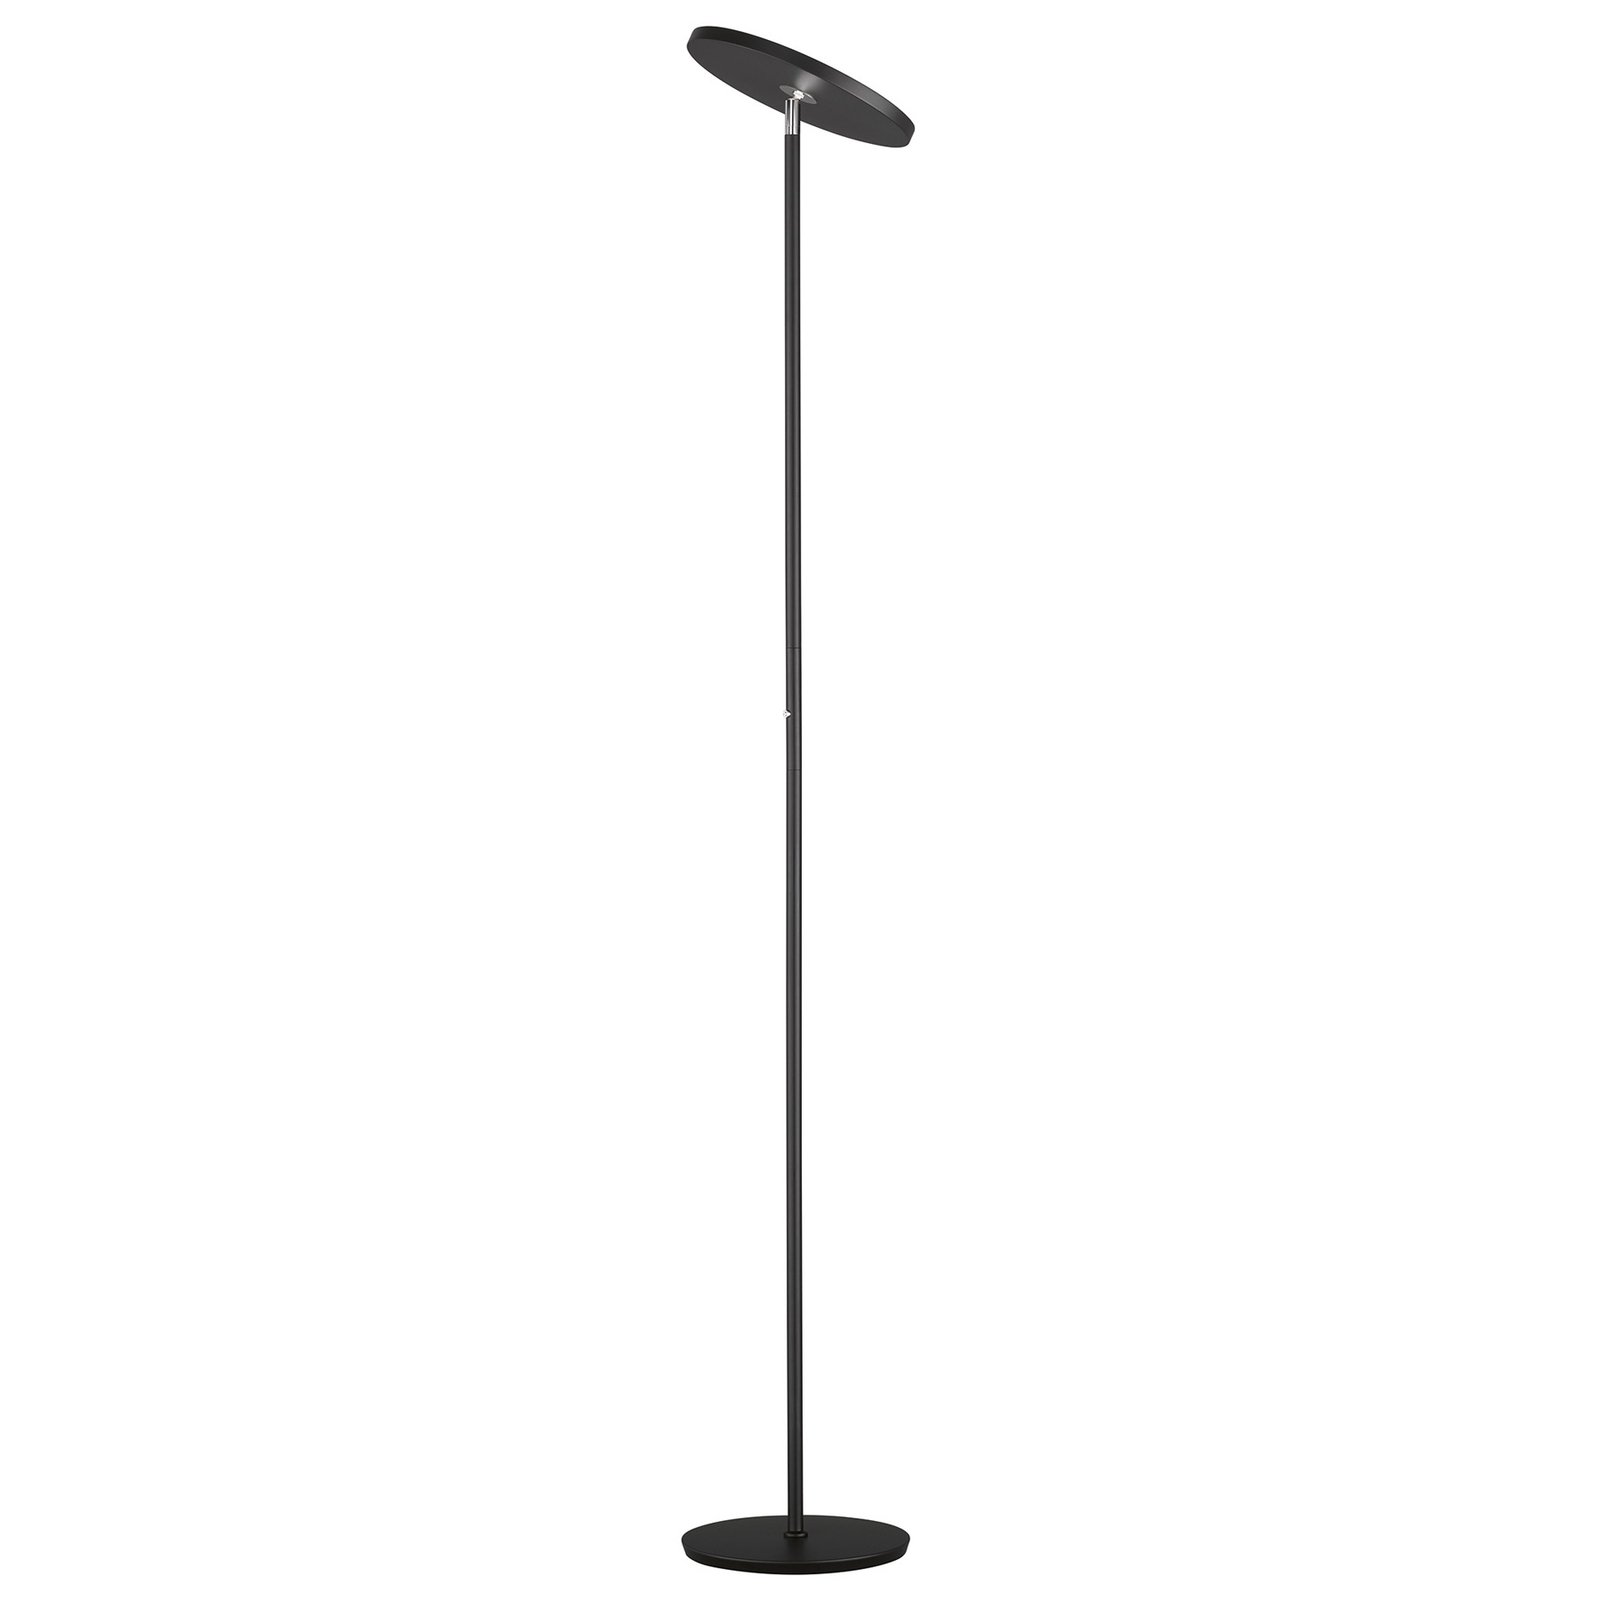 Fabi LED floor lamp made of metal, dimmable, black